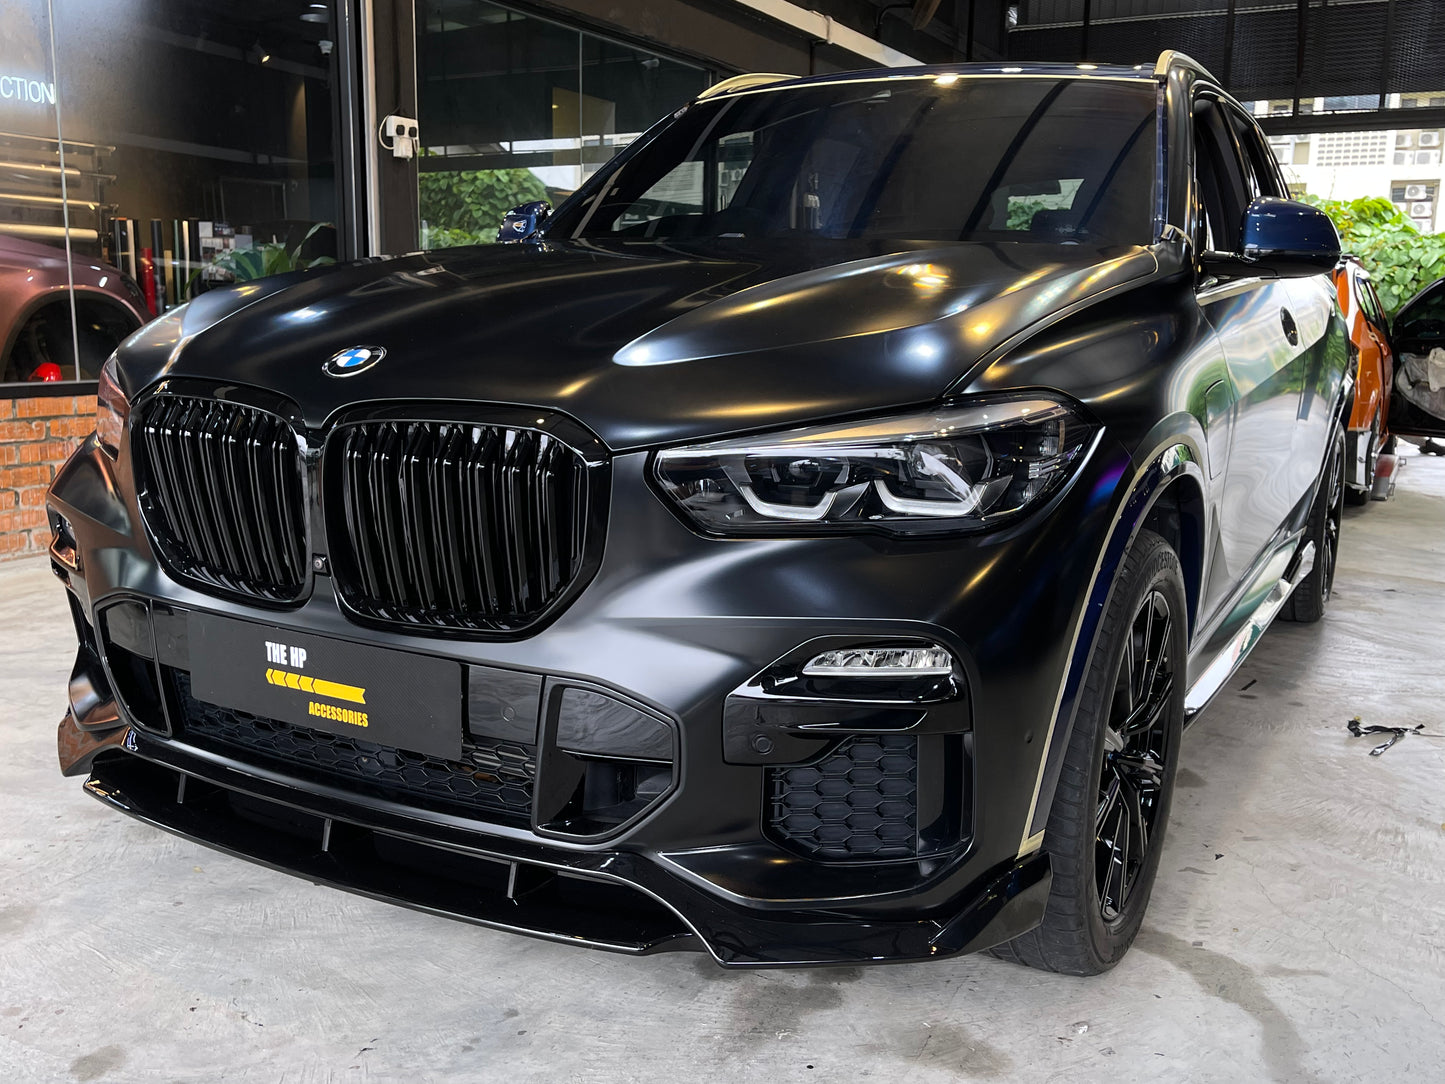 BMW X5 (G05) Black Warrior Gloss Black Aero Kit – The HP Accessories